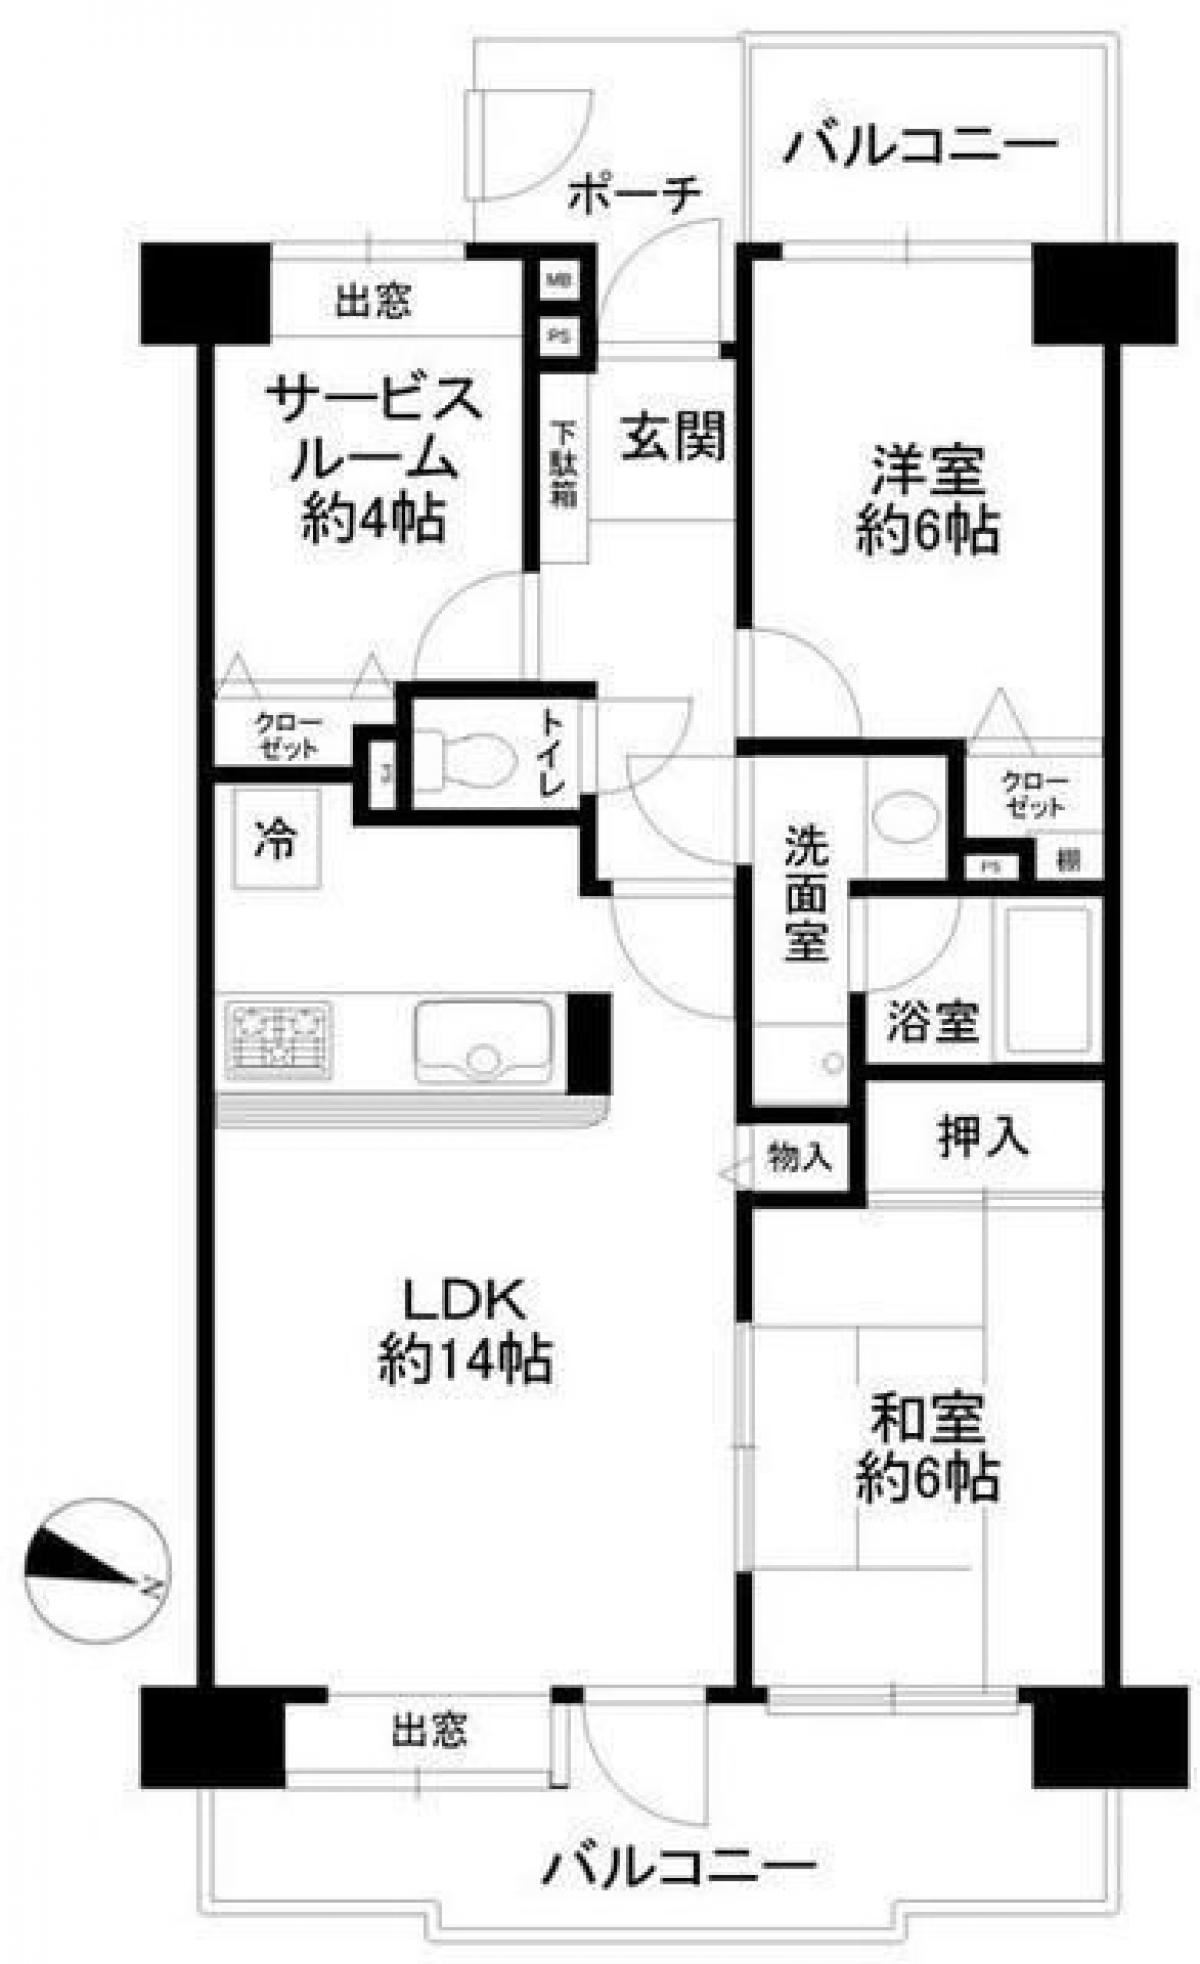 Picture of Apartment For Sale in Yoshikawa Shi, Saitama, Japan